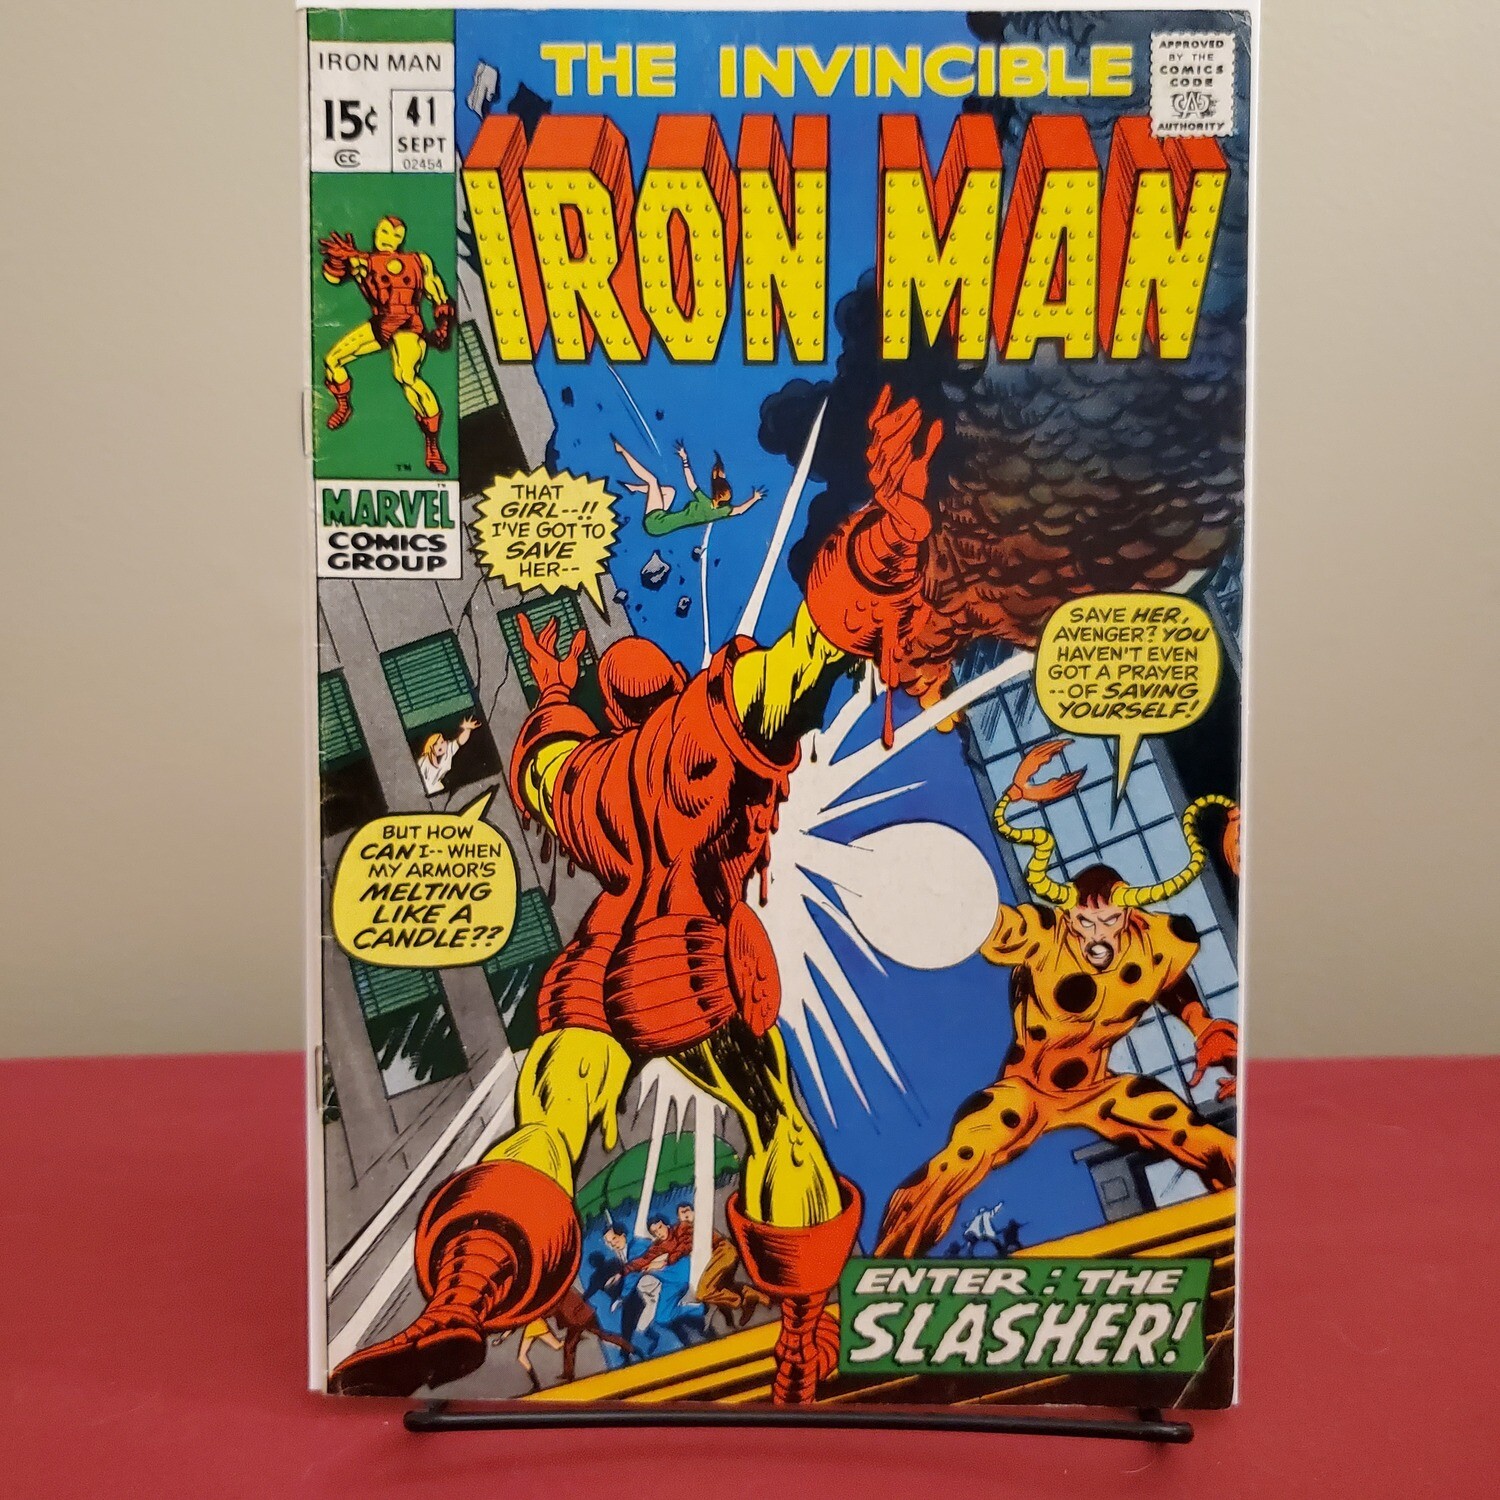 Iron Man #41 VG